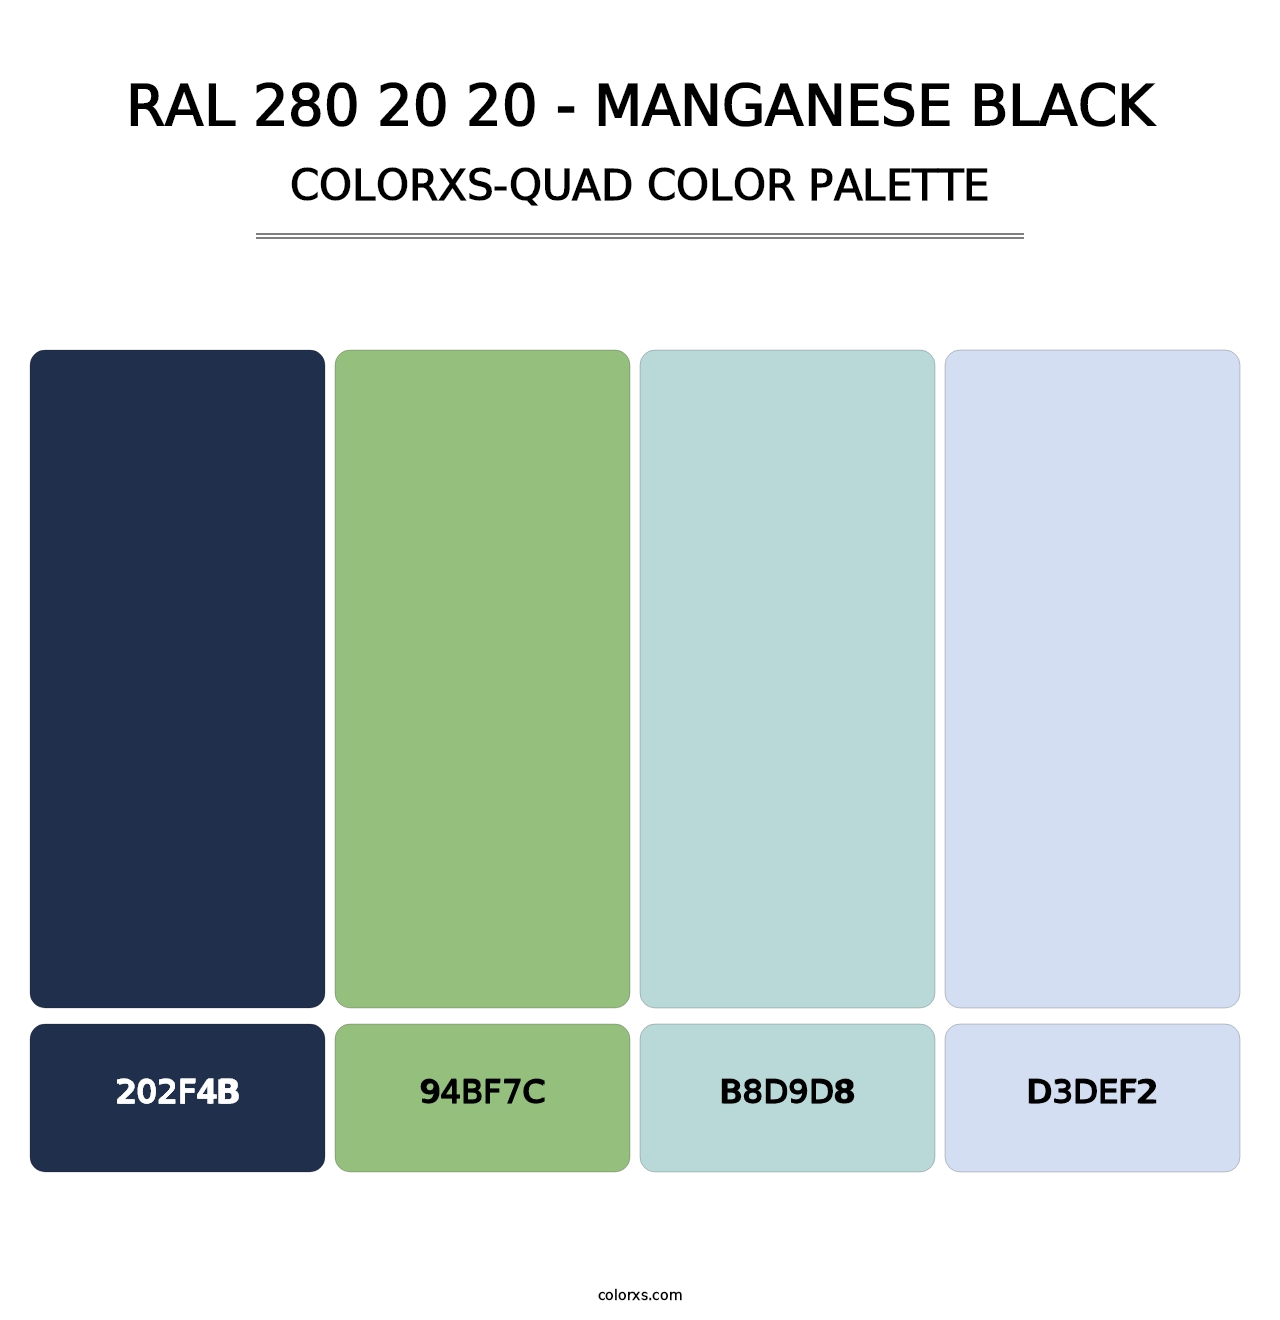 RAL 280 20 20 - Manganese Black - Colorxs Quad Palette